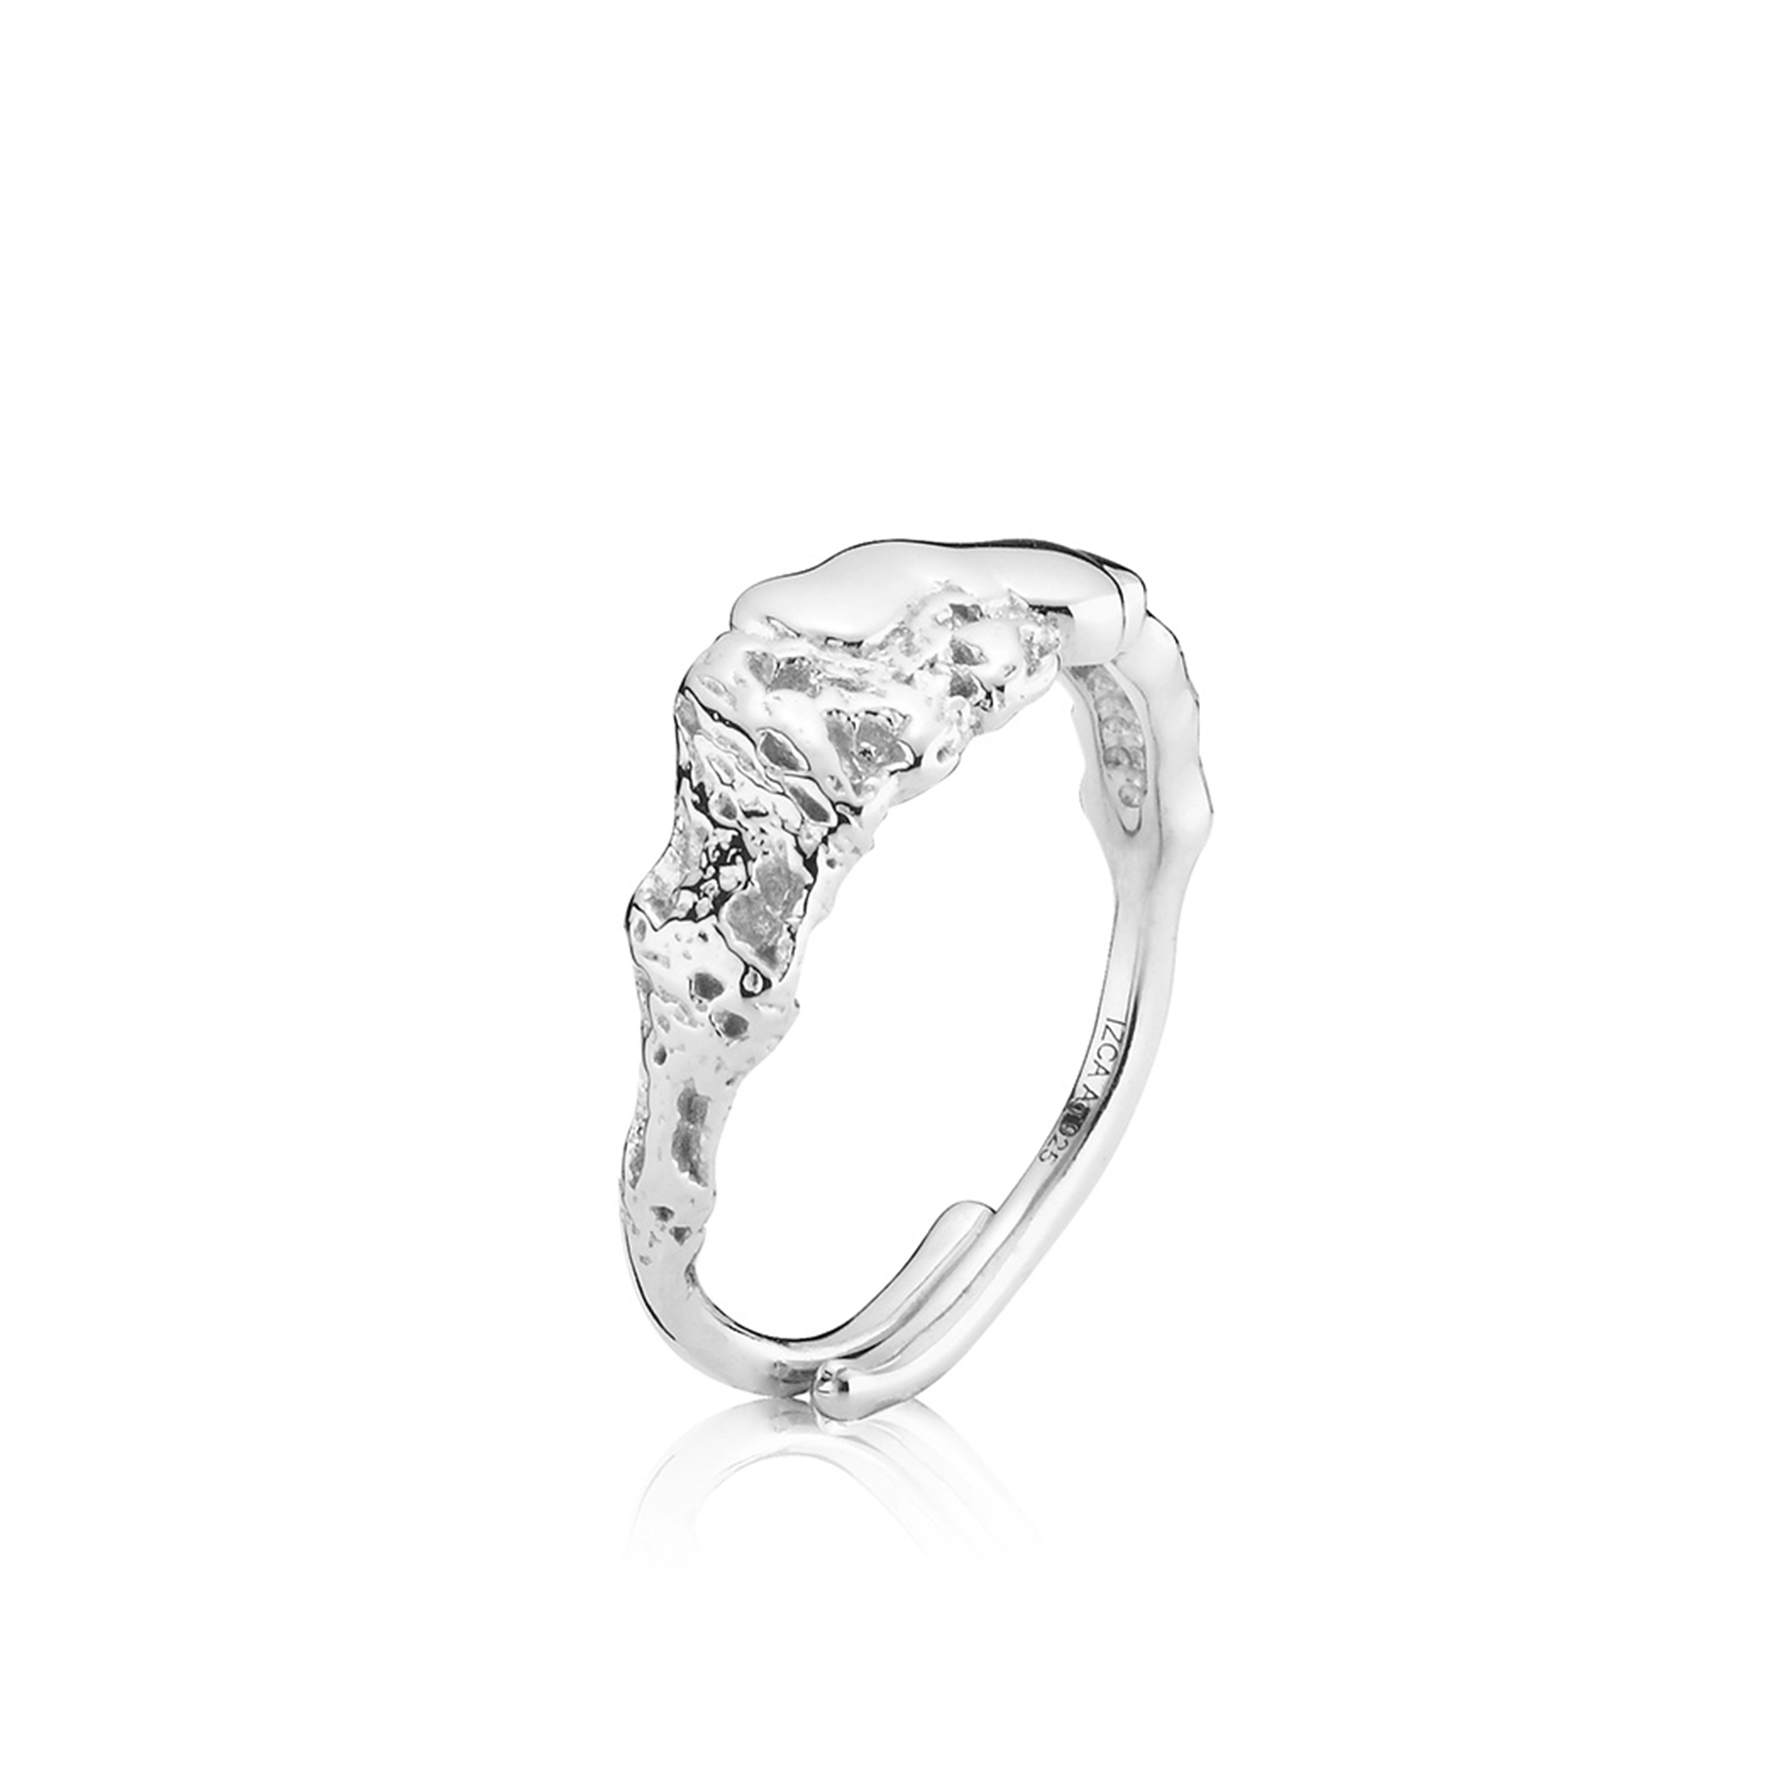 Josephine Livin By Sistie Medium Ring fra Sistie i Sølv Sterling 925